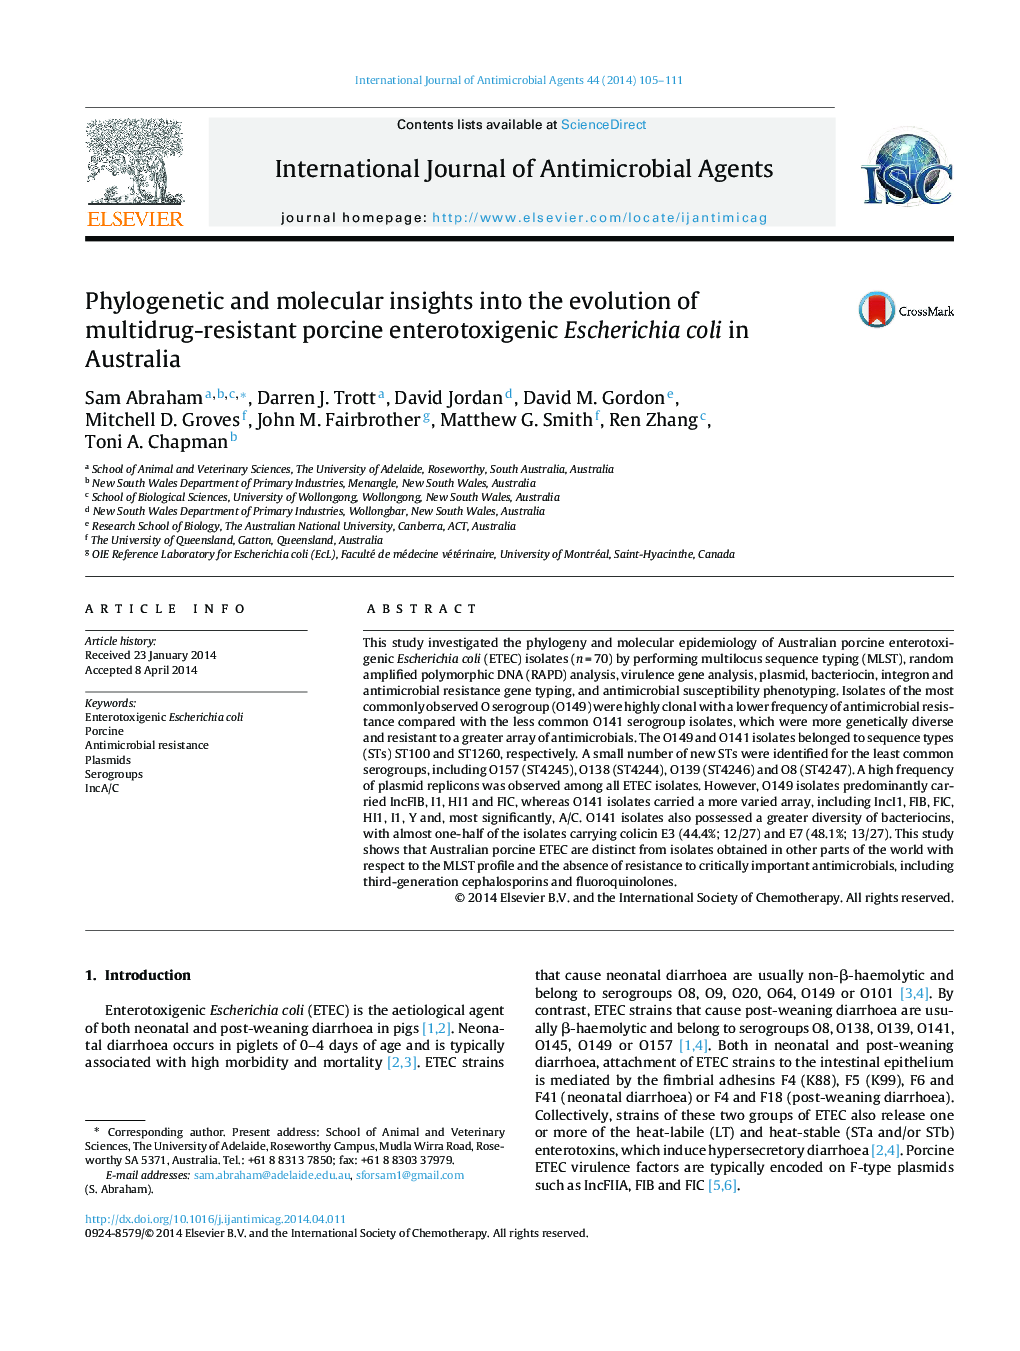 Phylogenetic and molecular insights into the evolution of multidrug-resistant porcine enterotoxigenic Escherichia coli in Australia